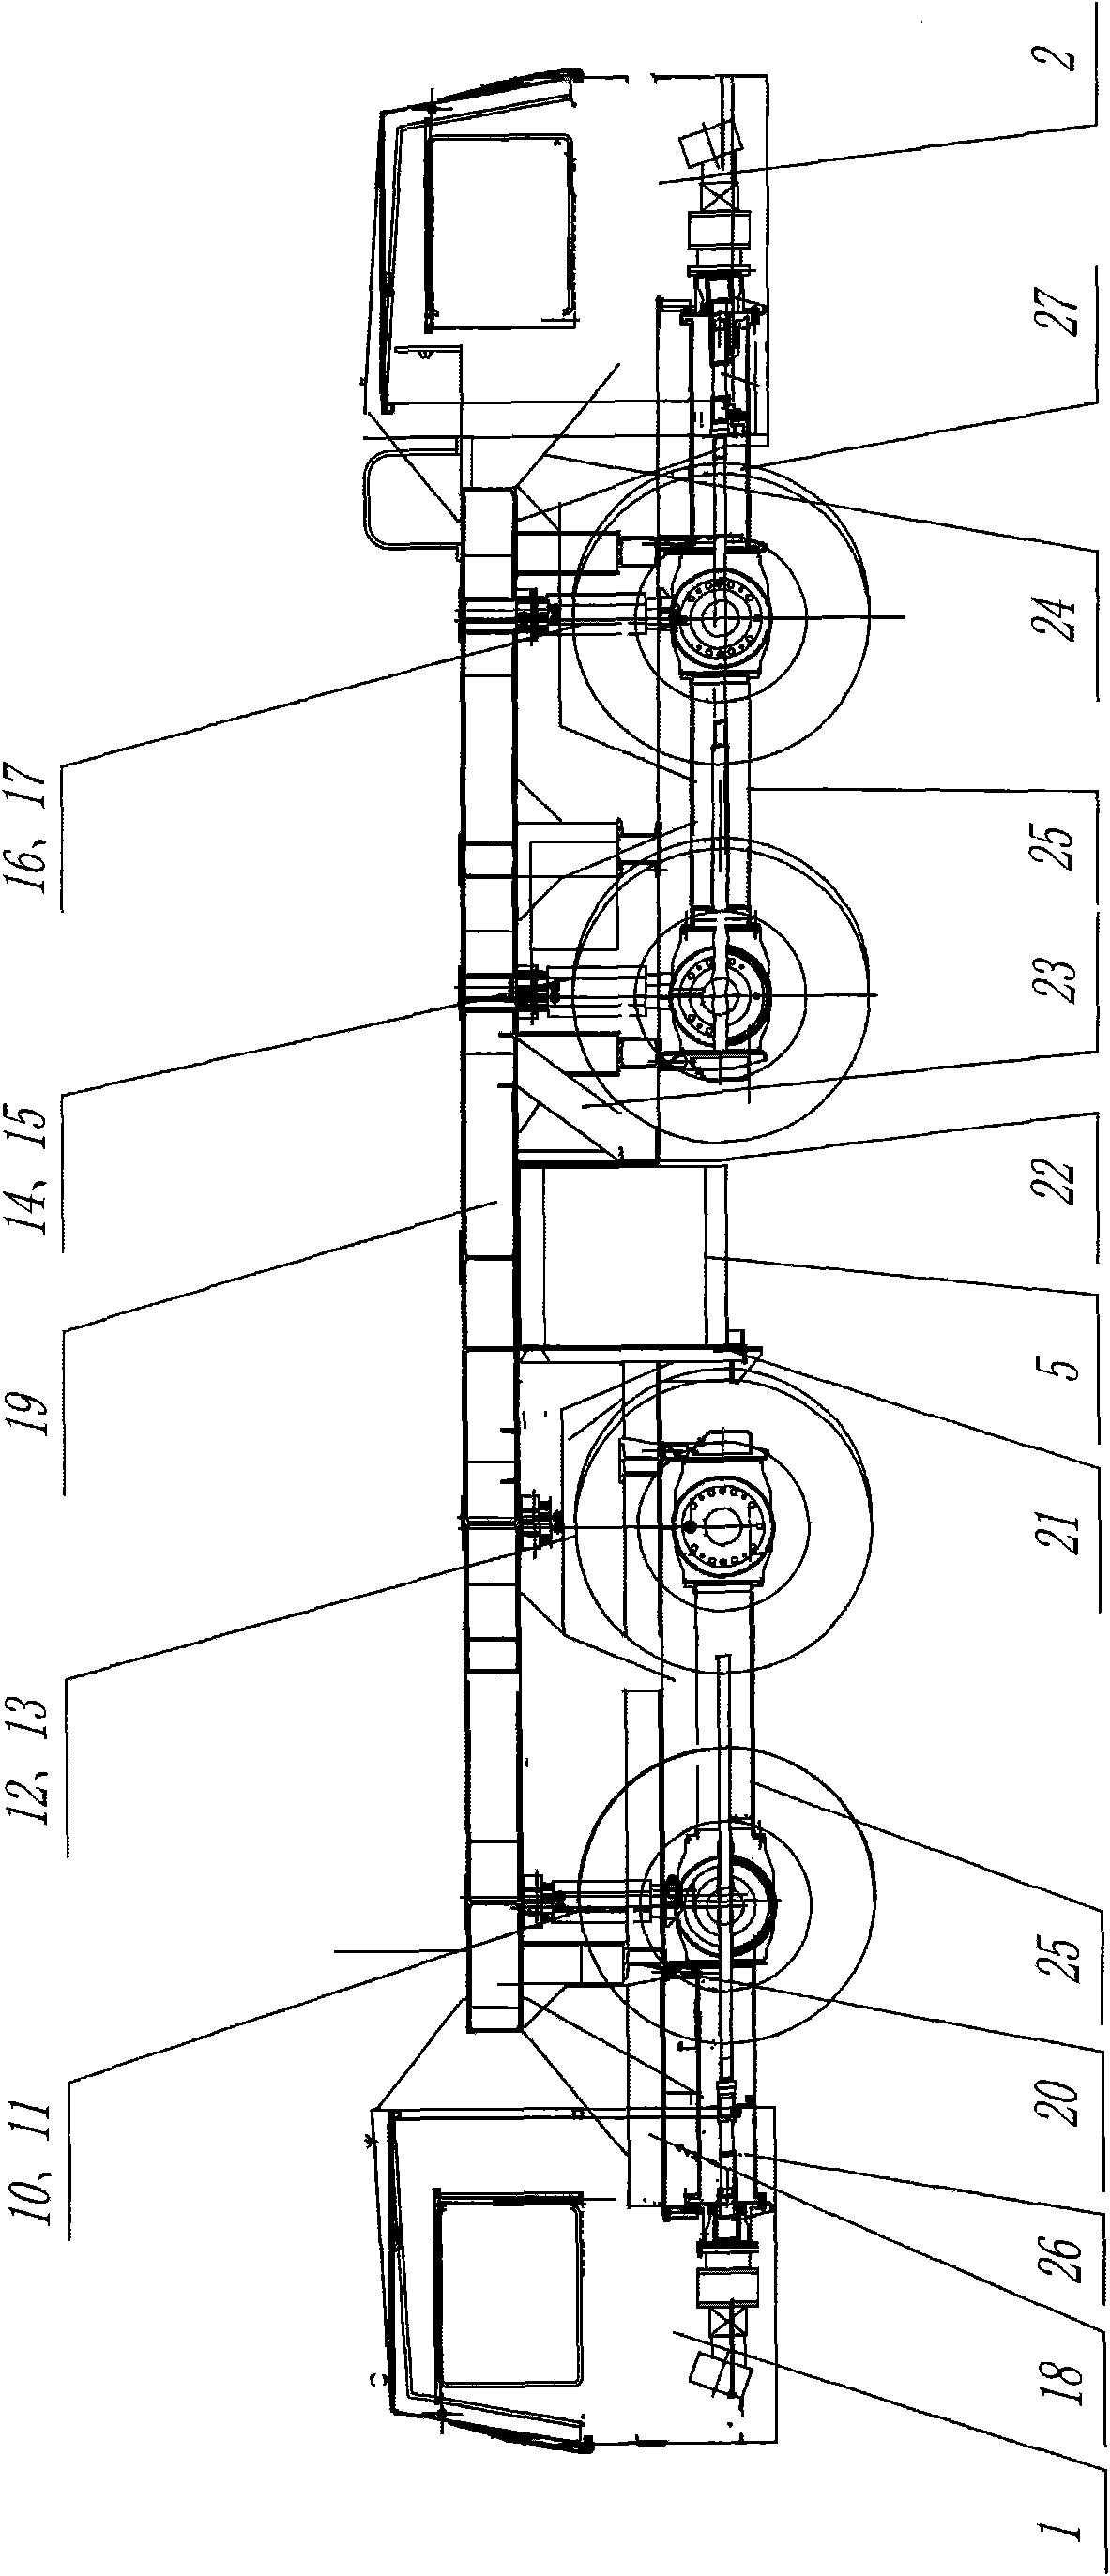 Orbit-plate bidirectional carrier vehicle